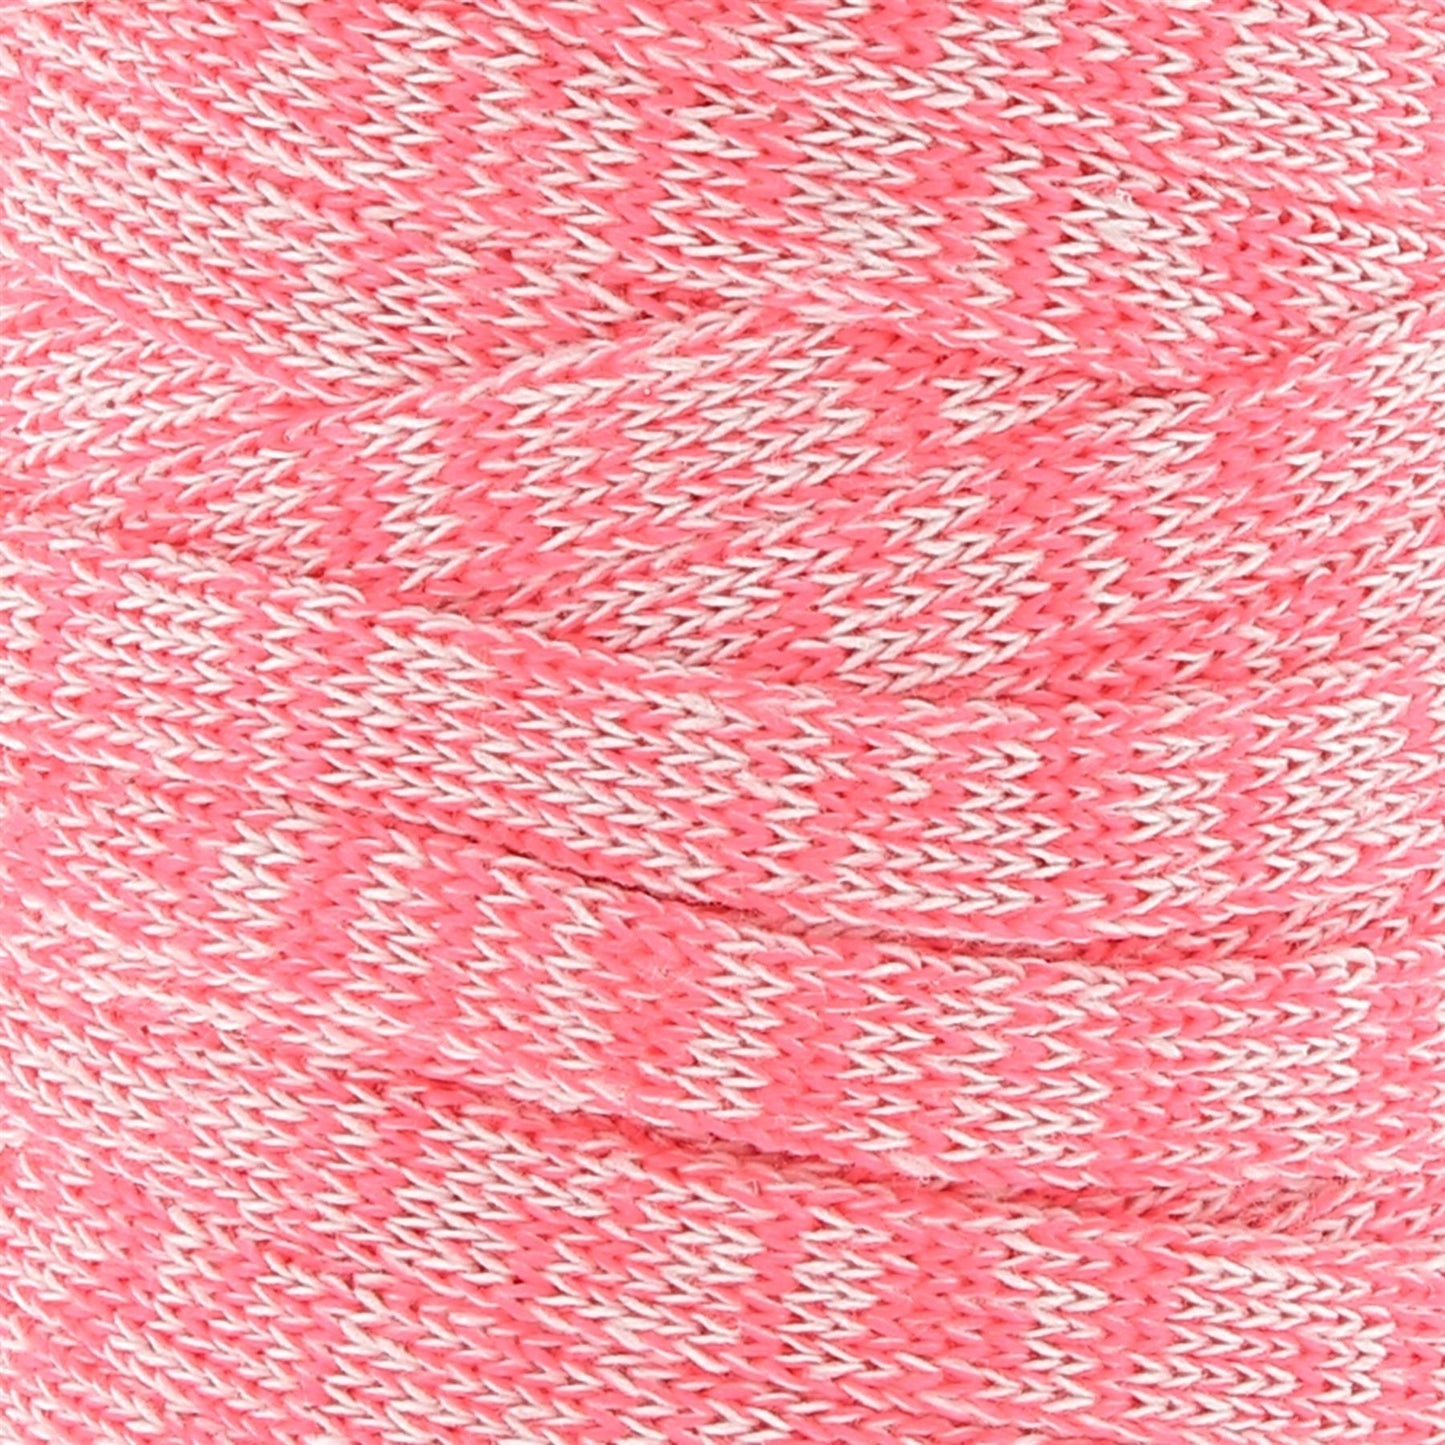 [Hoooked] RXLNEON4MINI RibbonXL Neon Radical Rose Cotton Yarn - 28M, 80g